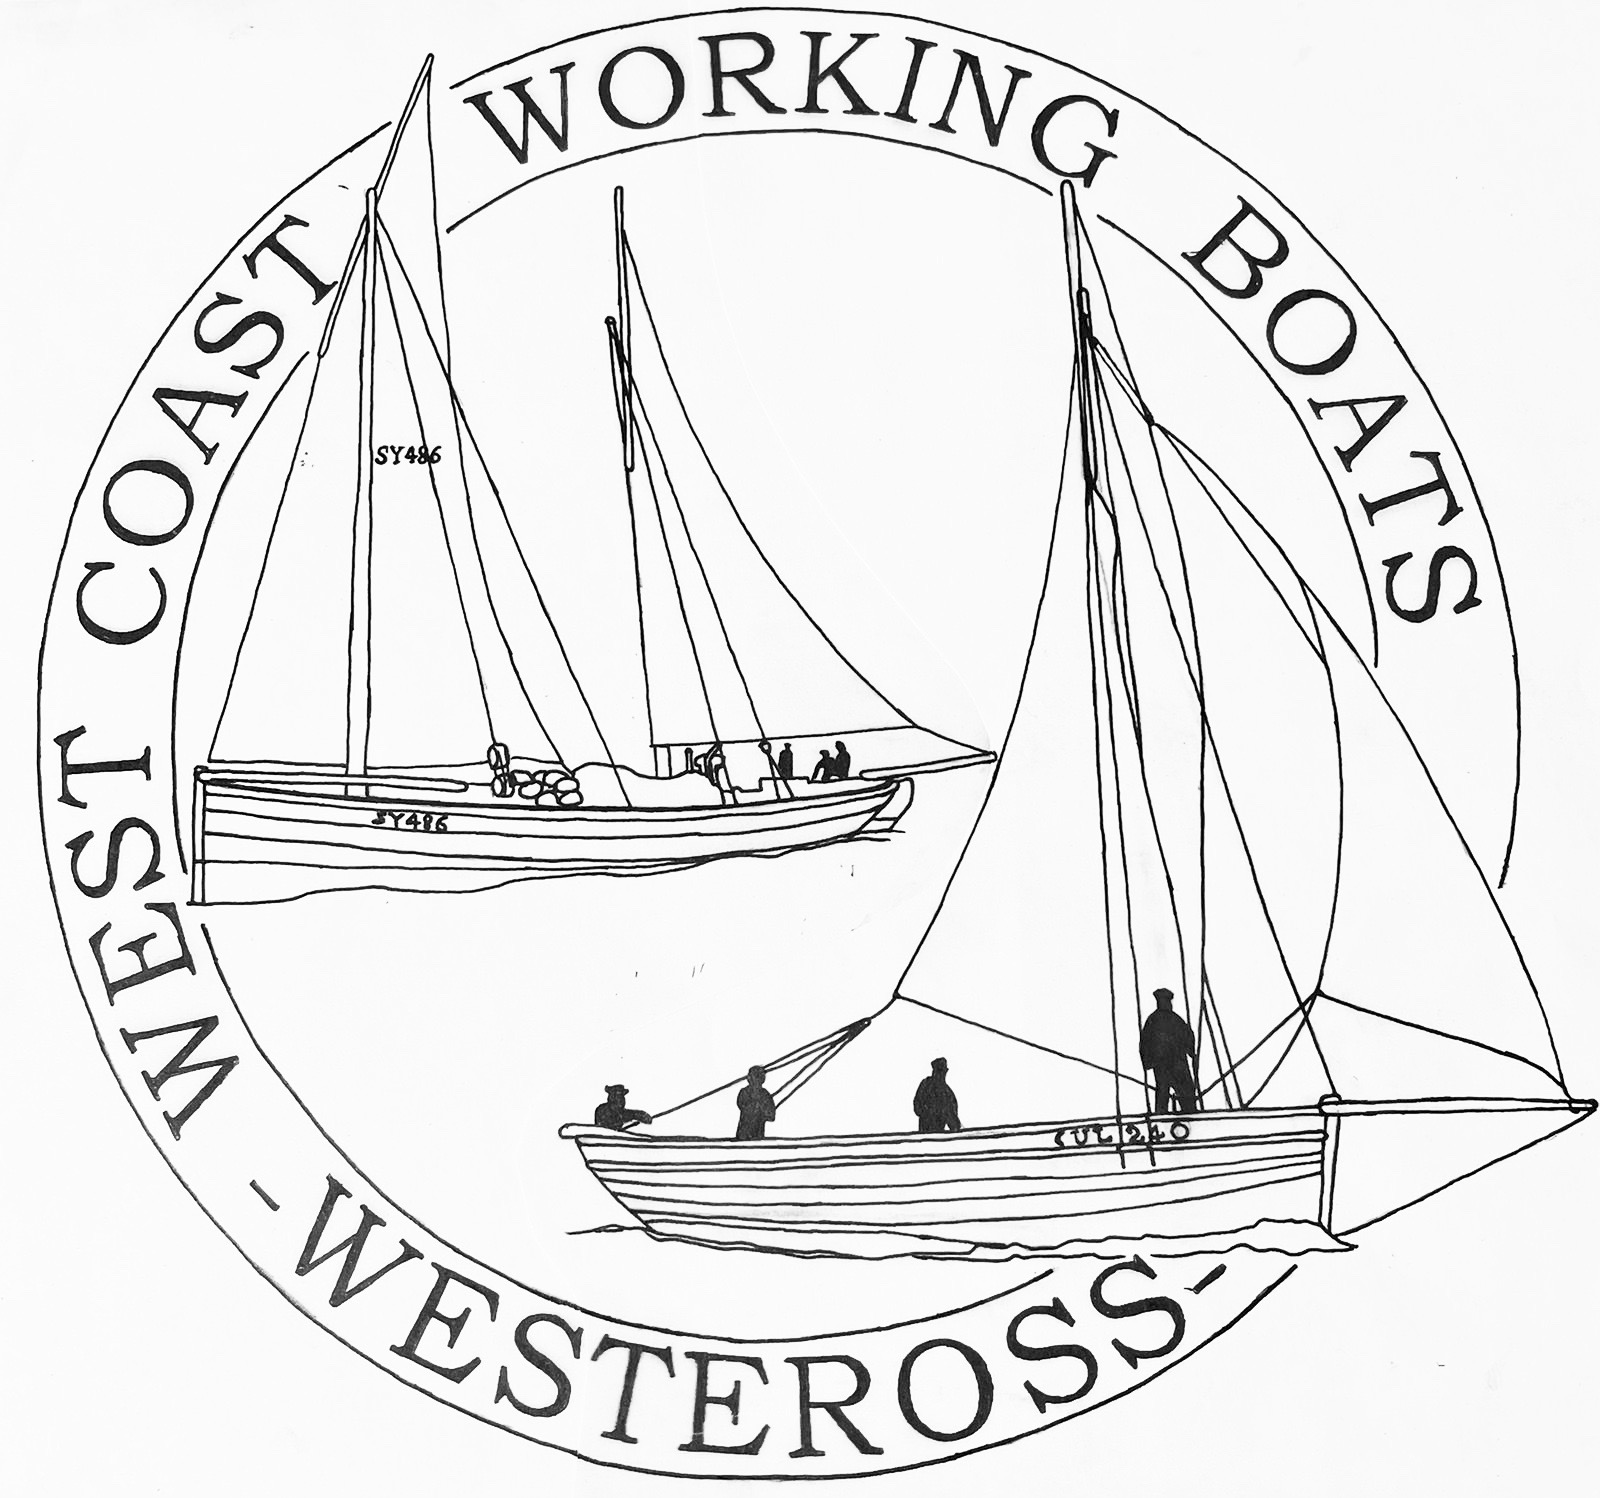 West Coast Working Boats